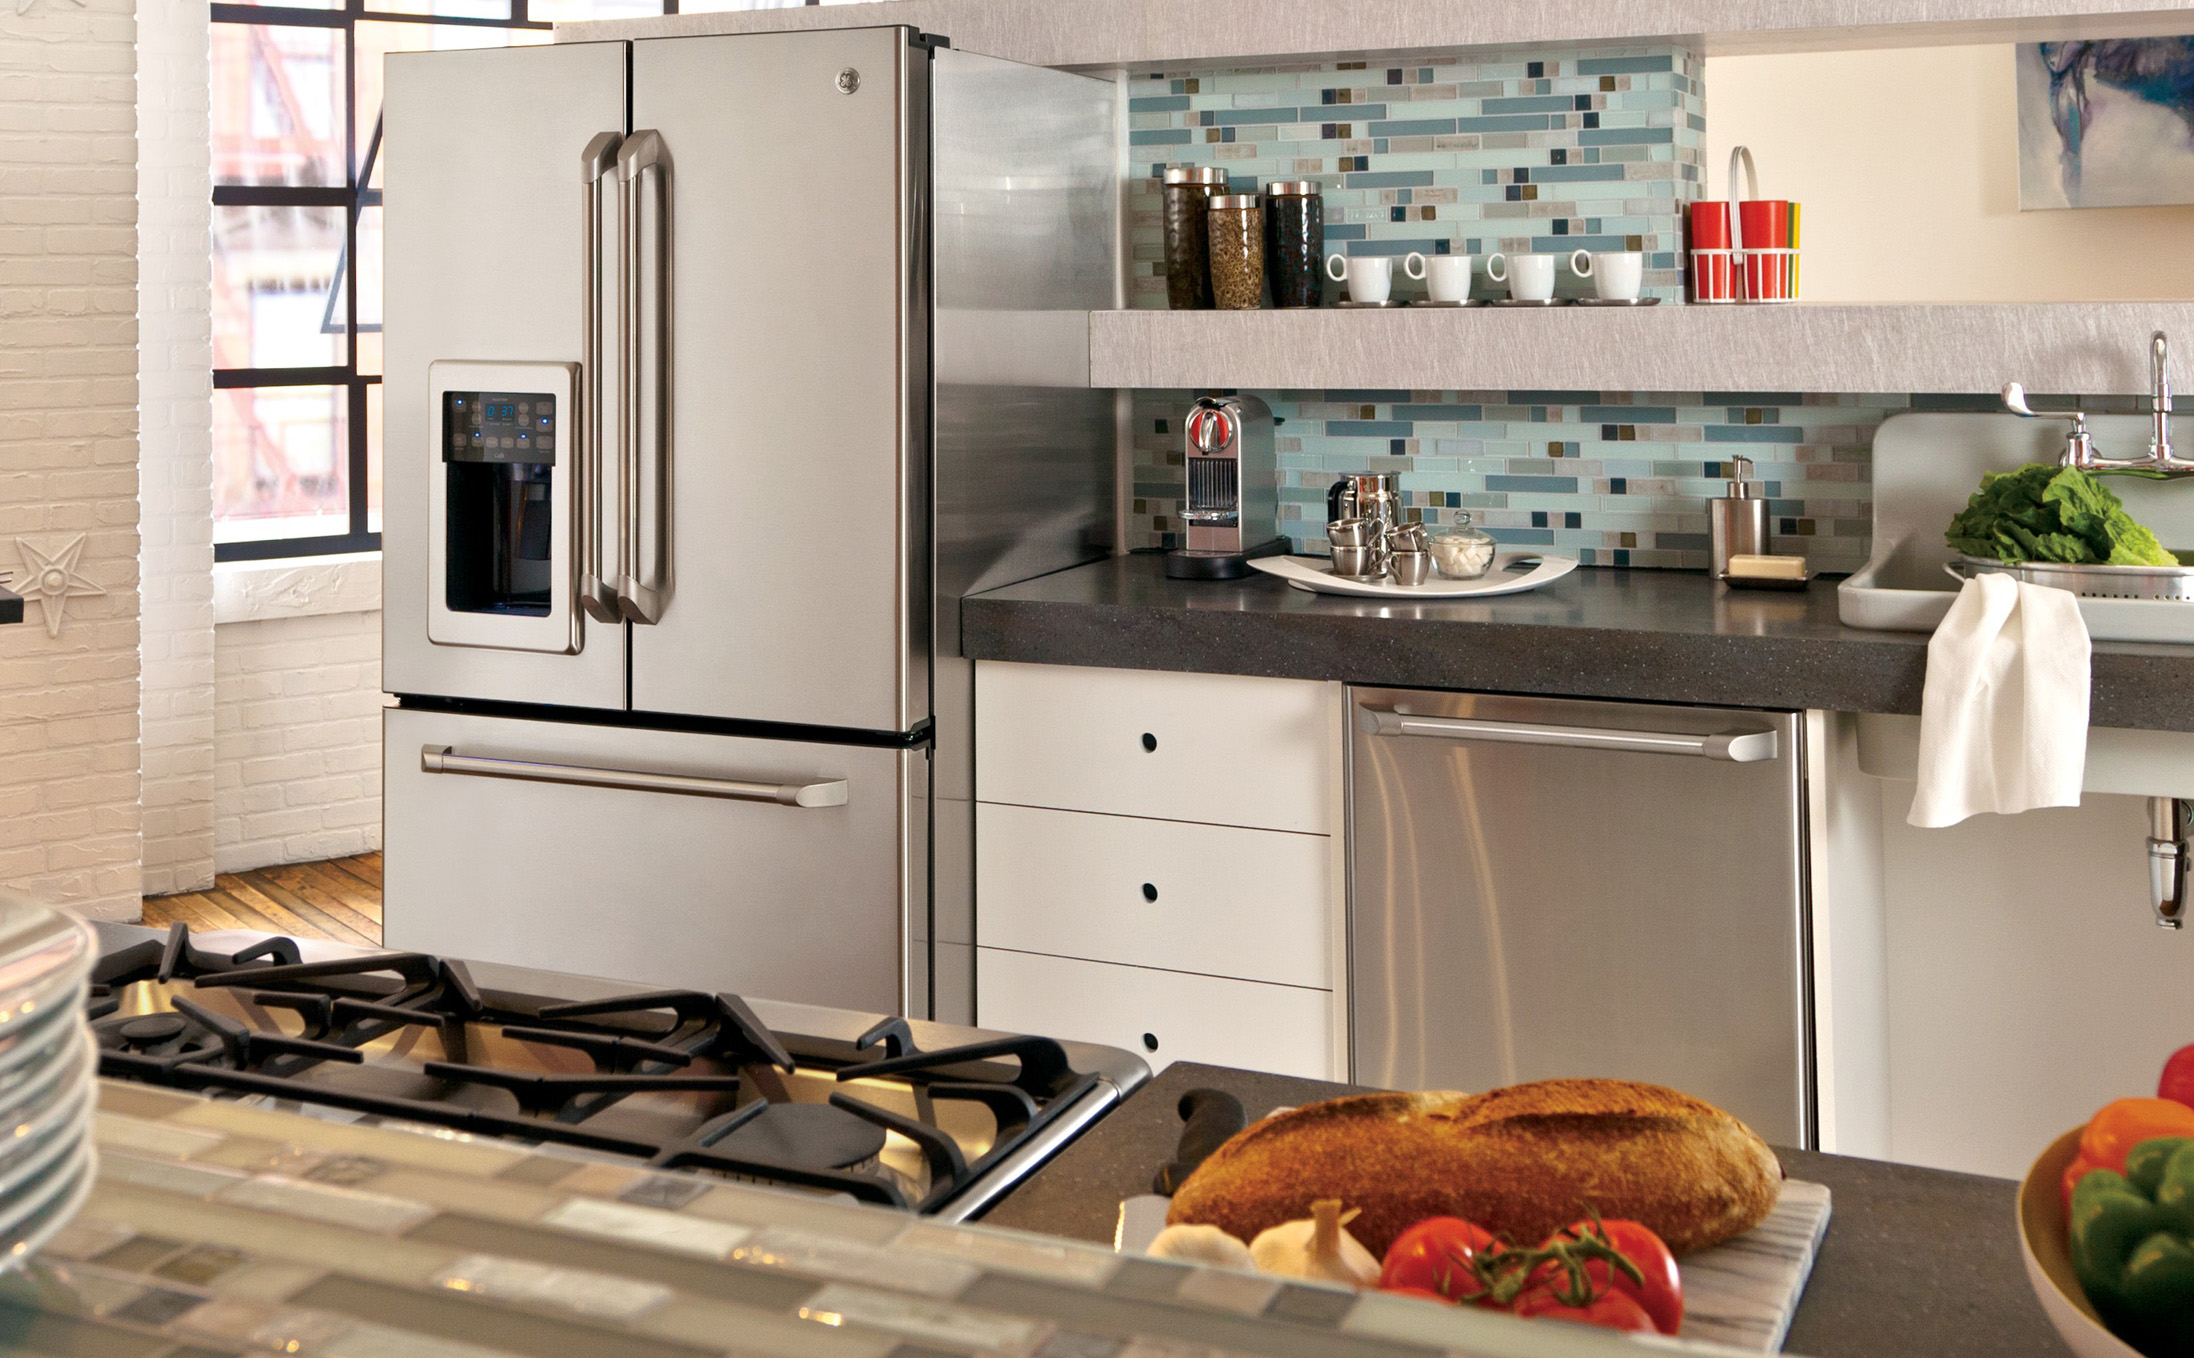 Ge Cafe Kitchen Appliance Reviews Dcrwebdesign